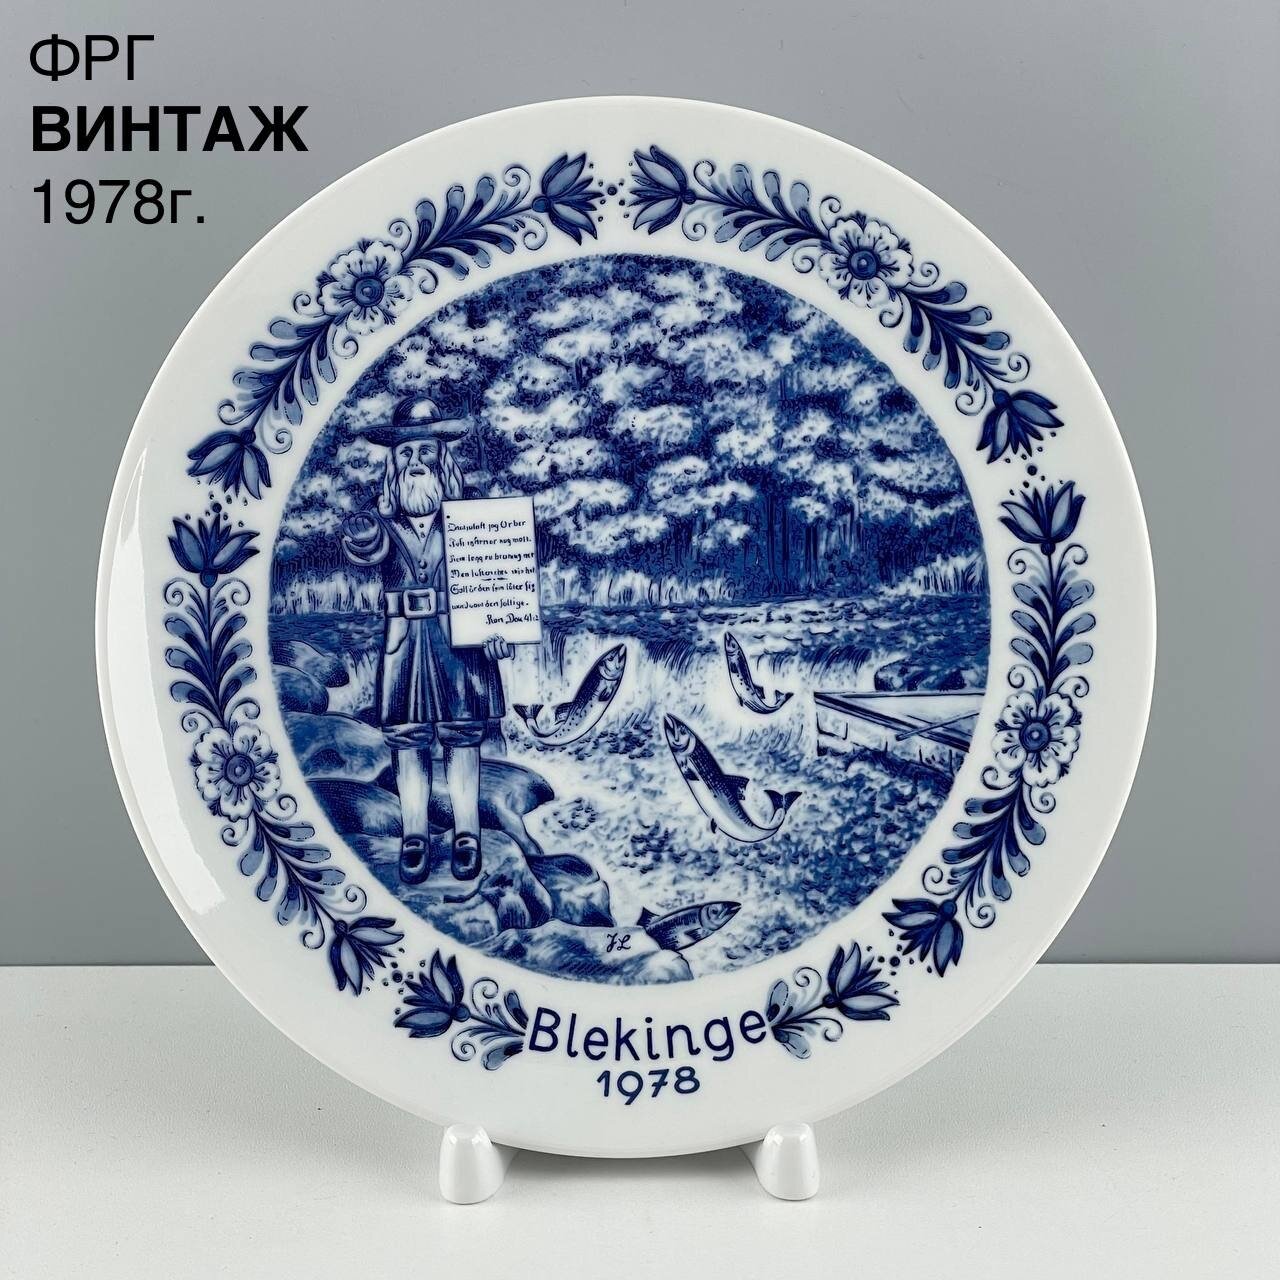 Винтажная декоративная тарелка "Blekinge". Фарфор Seltmann Weiden. ФРГ, 1978 г.